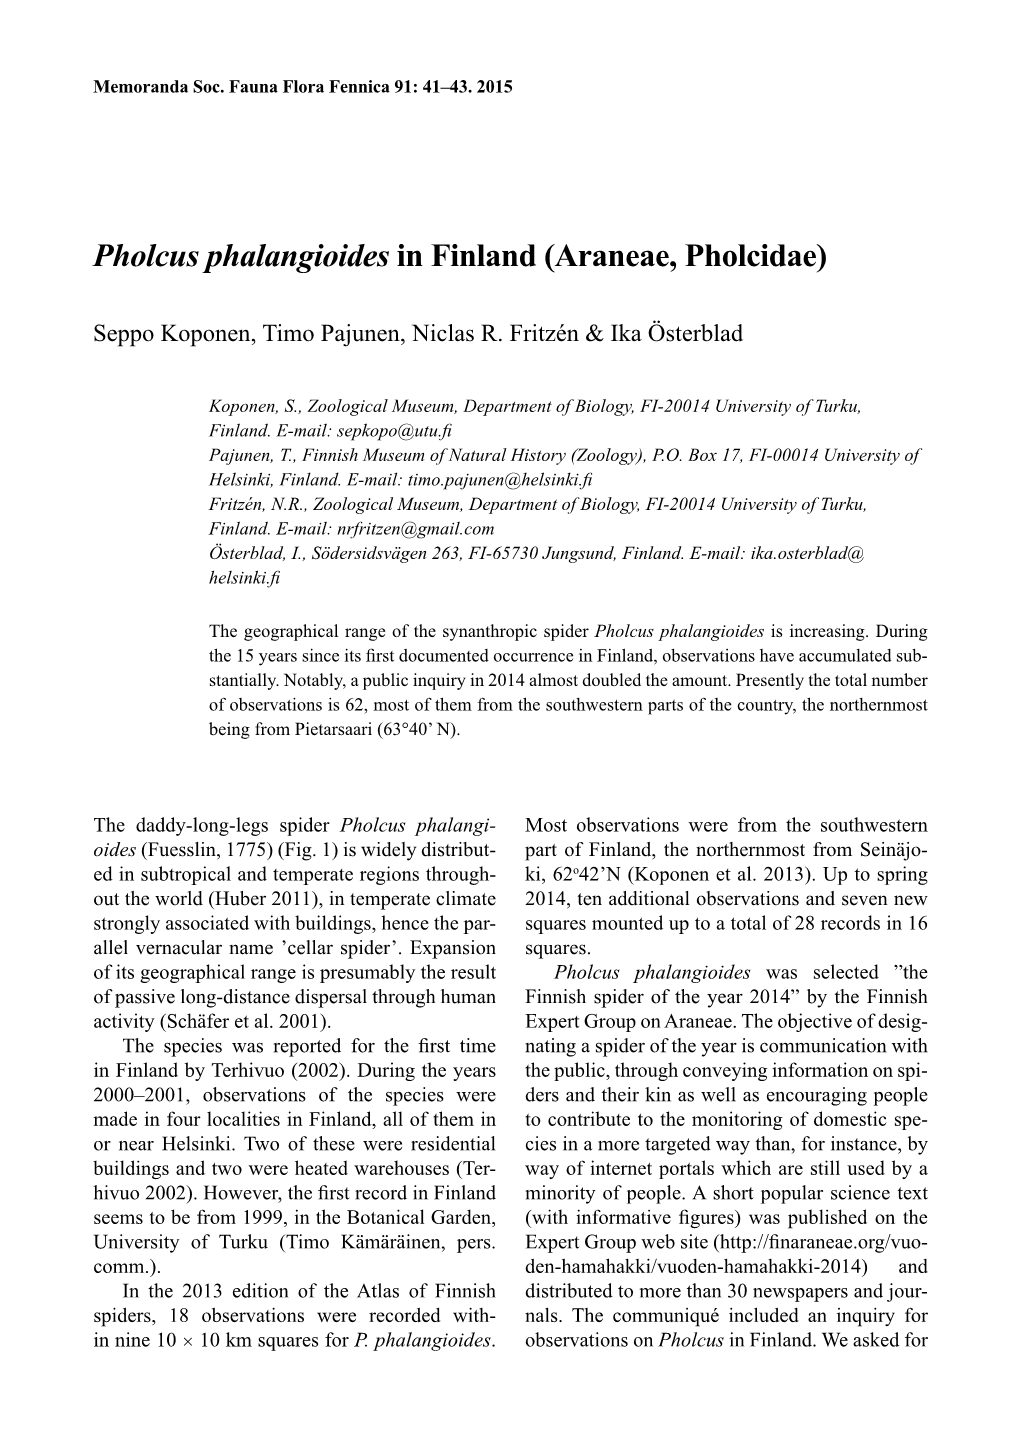 Pholcus Phalangioides in Finland (Araneae, Pholcidae)